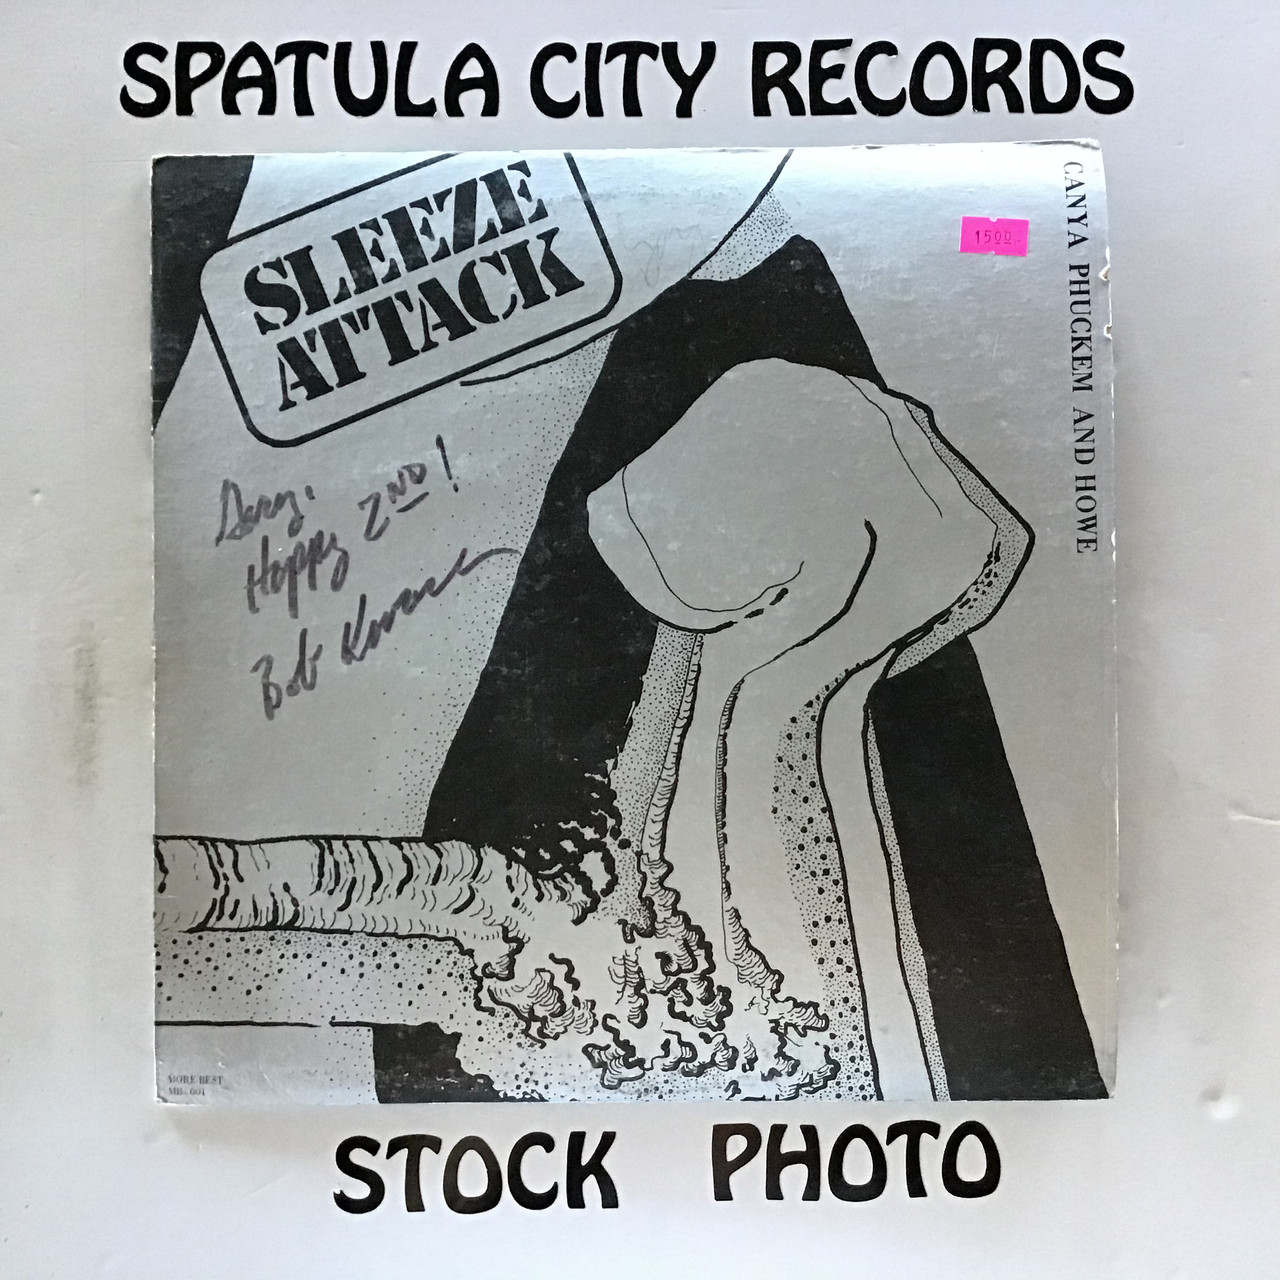 Canya Phuckem and Howe - Sleeze Attack - vinyl record LP